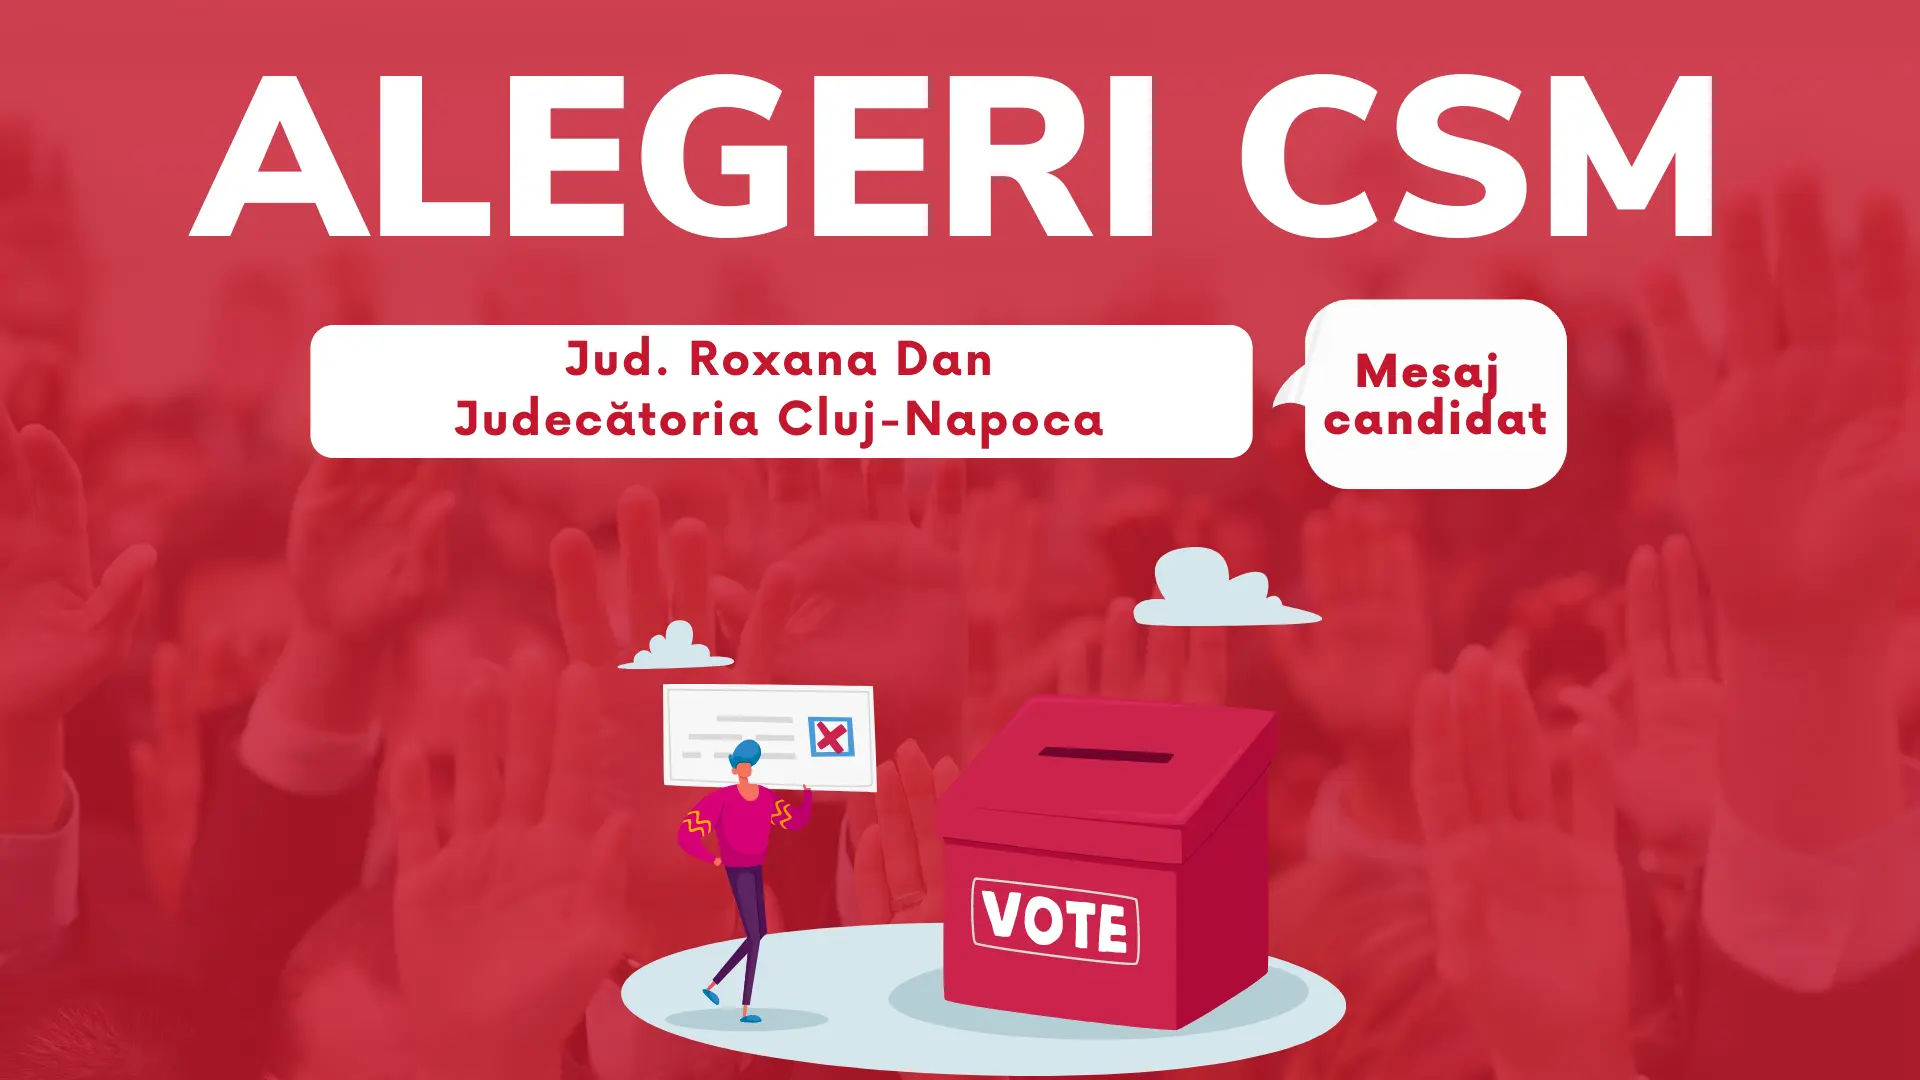 Jud. Roxana Dan, Judecătoria Cluj-Napoca. Mesaj Alegeri CSM 2022